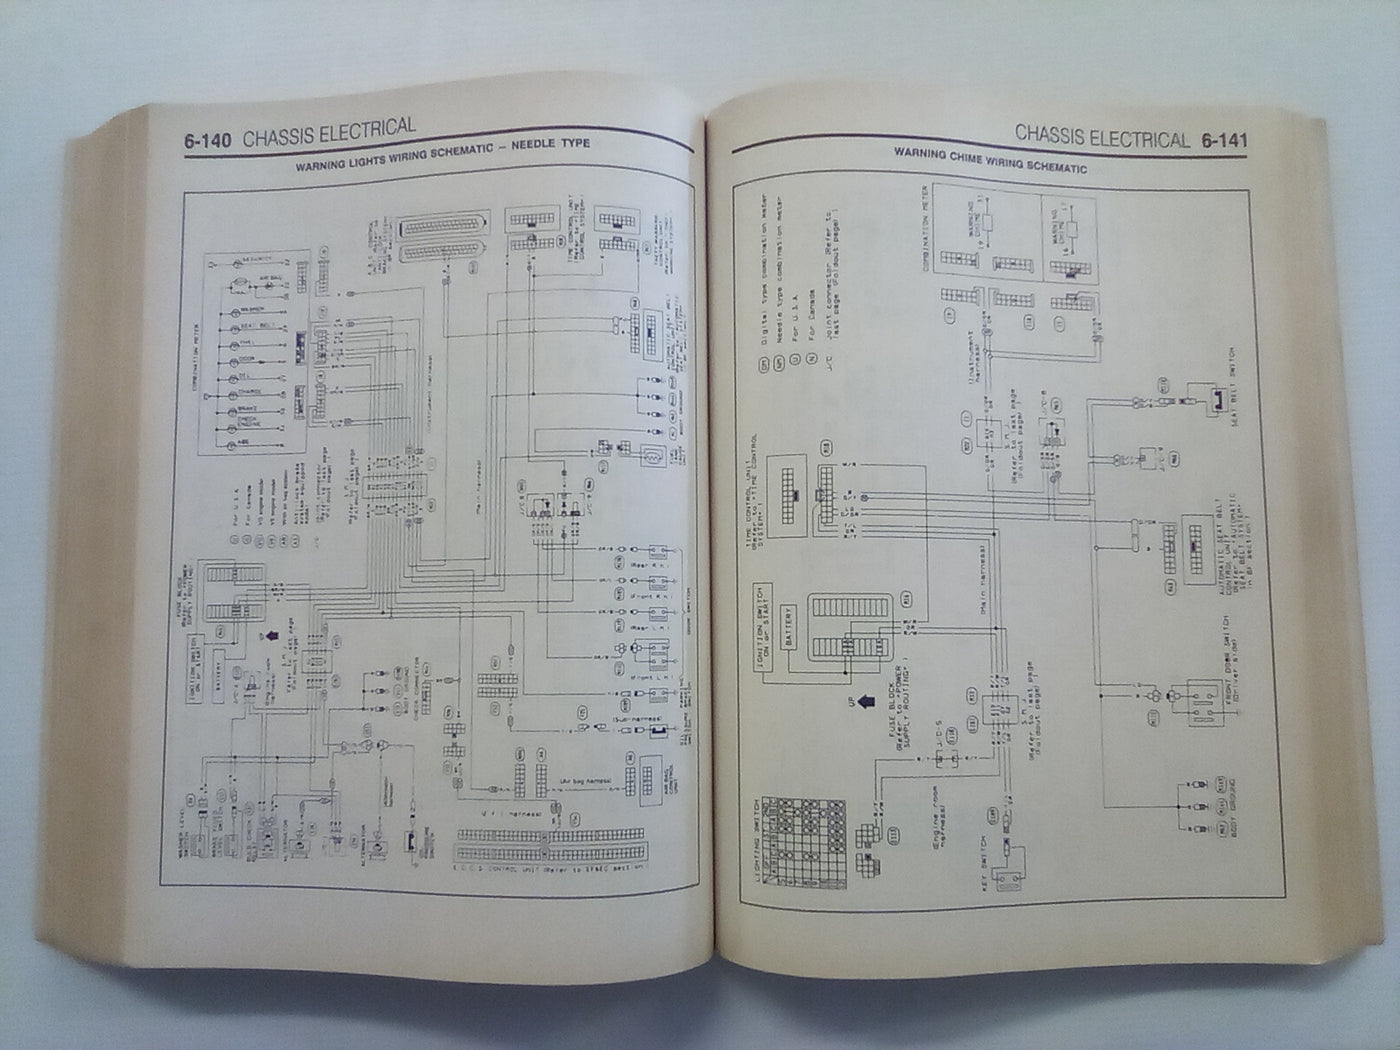 Nissan Maxima 1985-1992 Chilton's Repair Manual